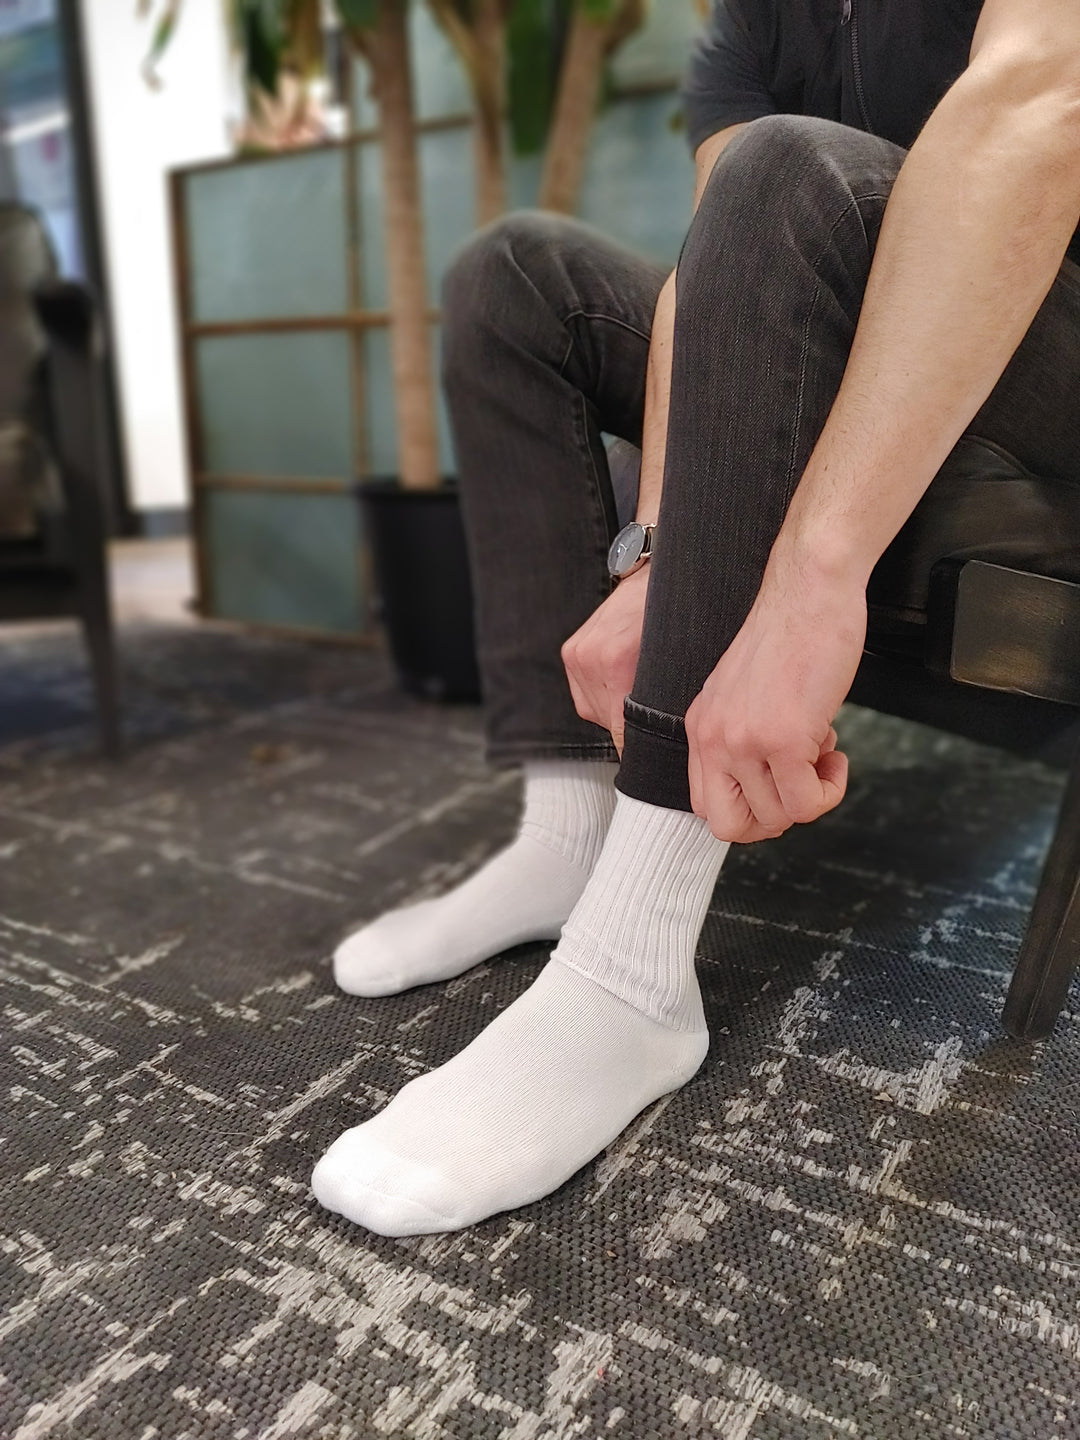 J.B. Field's 98% Cotton Cushion Diabetic Socks